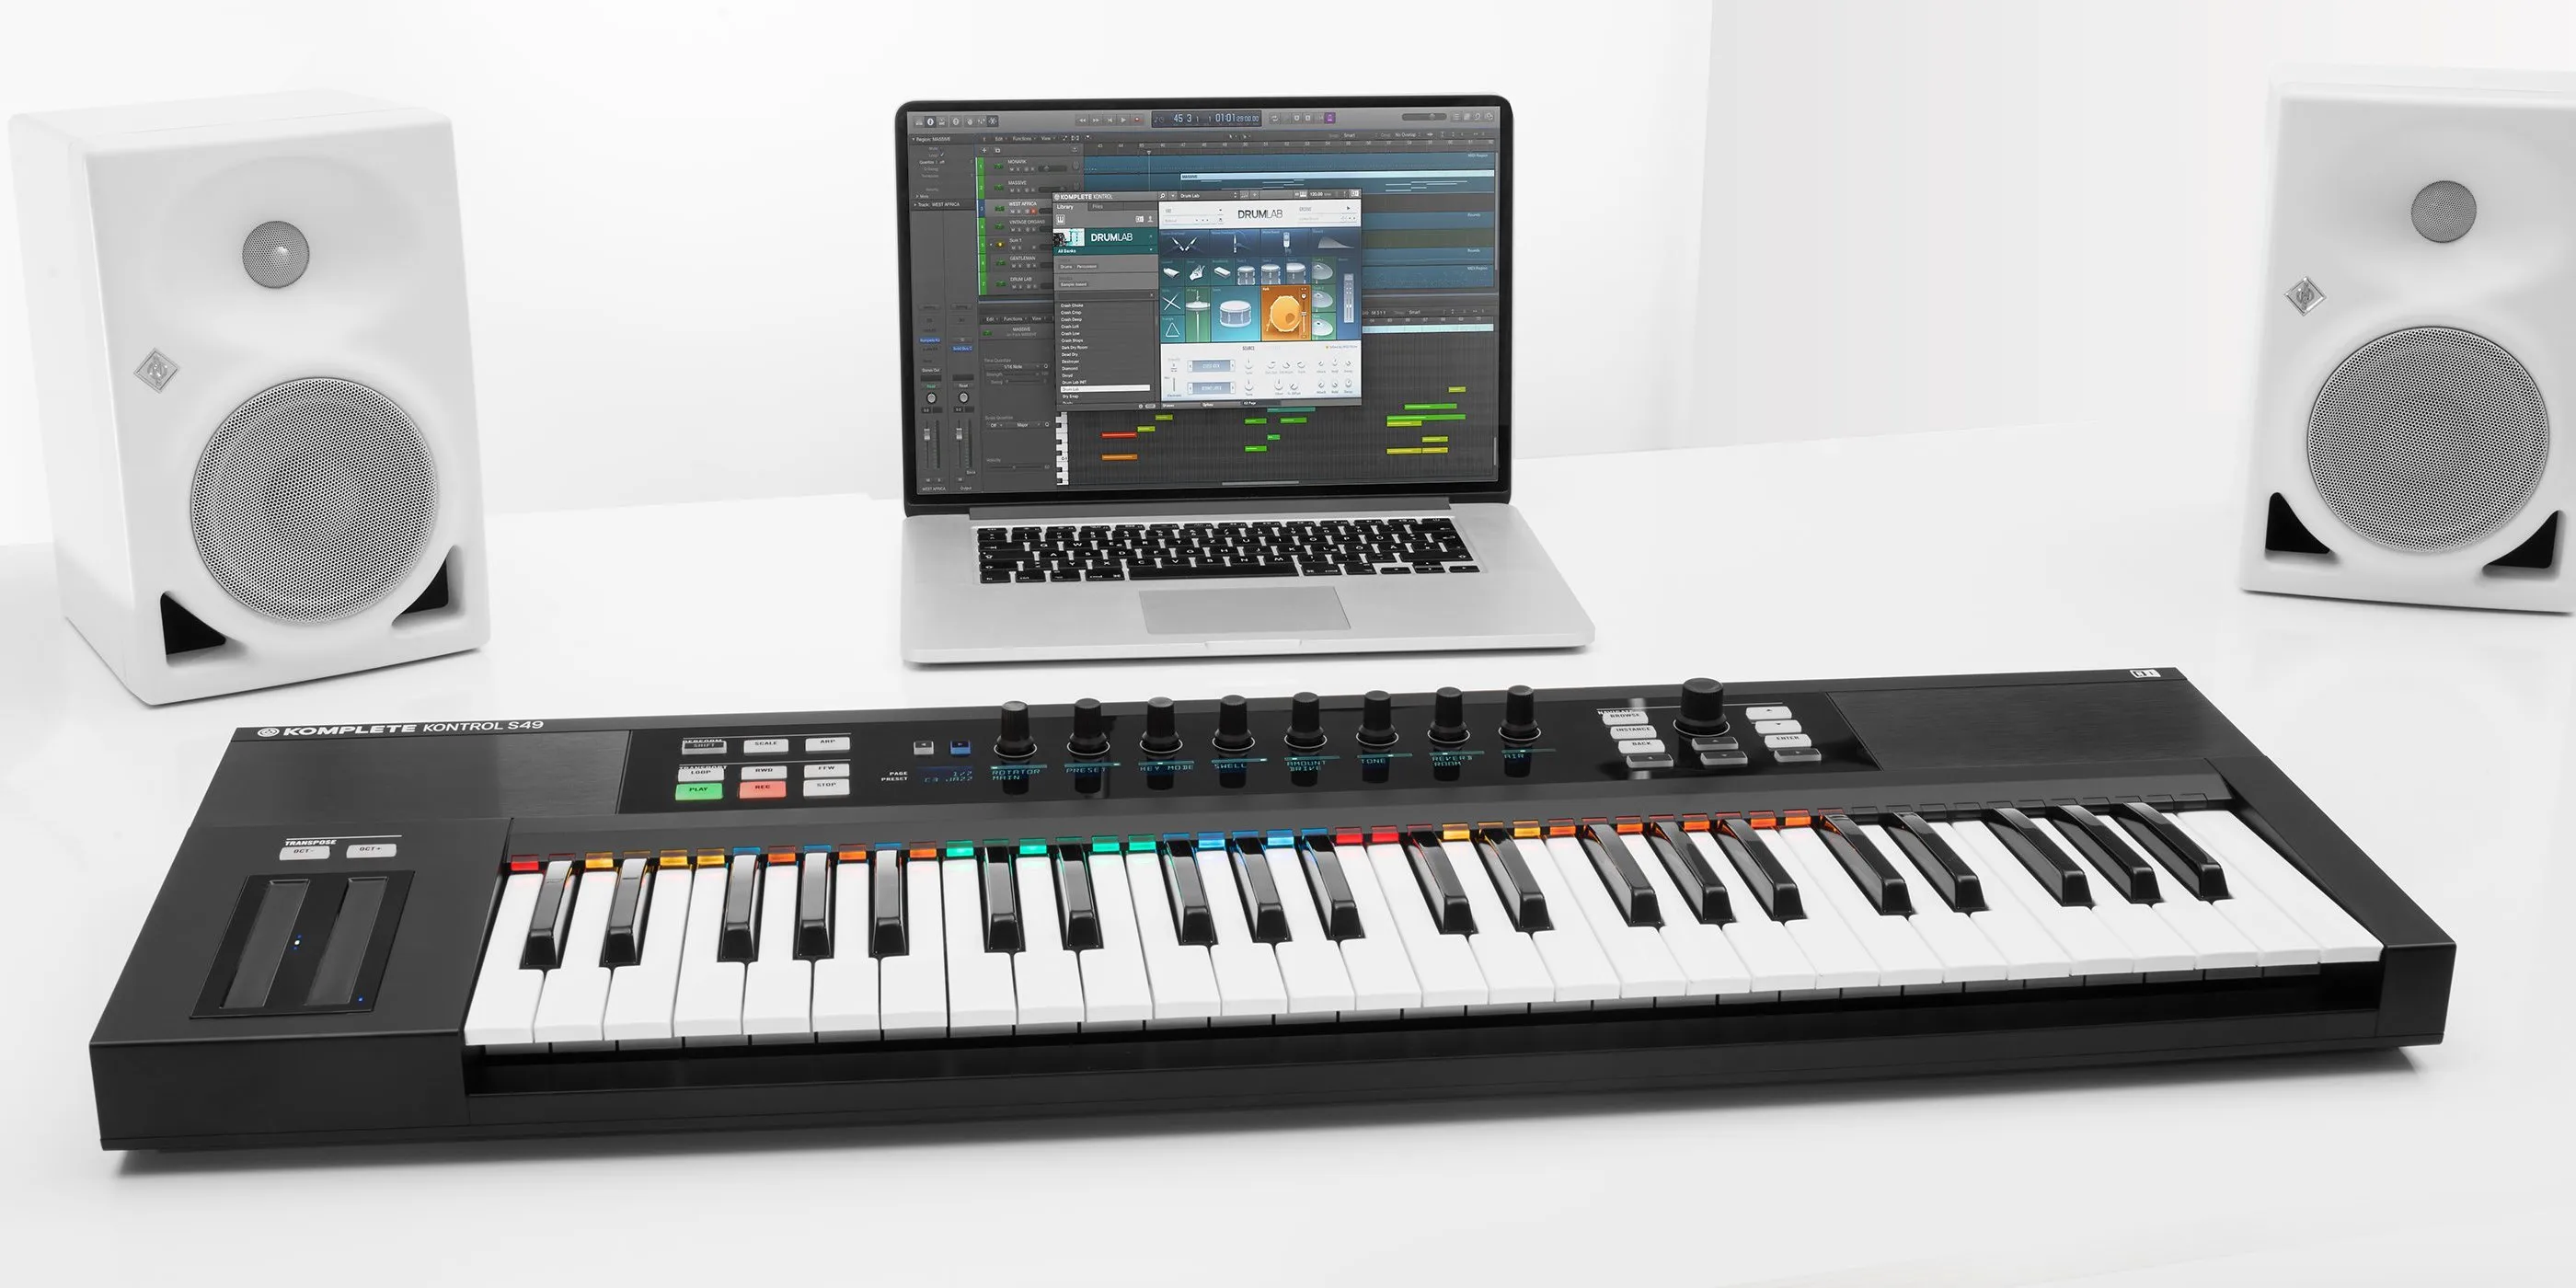 What MIDI Keyboard Can I Use With Logic Pro X